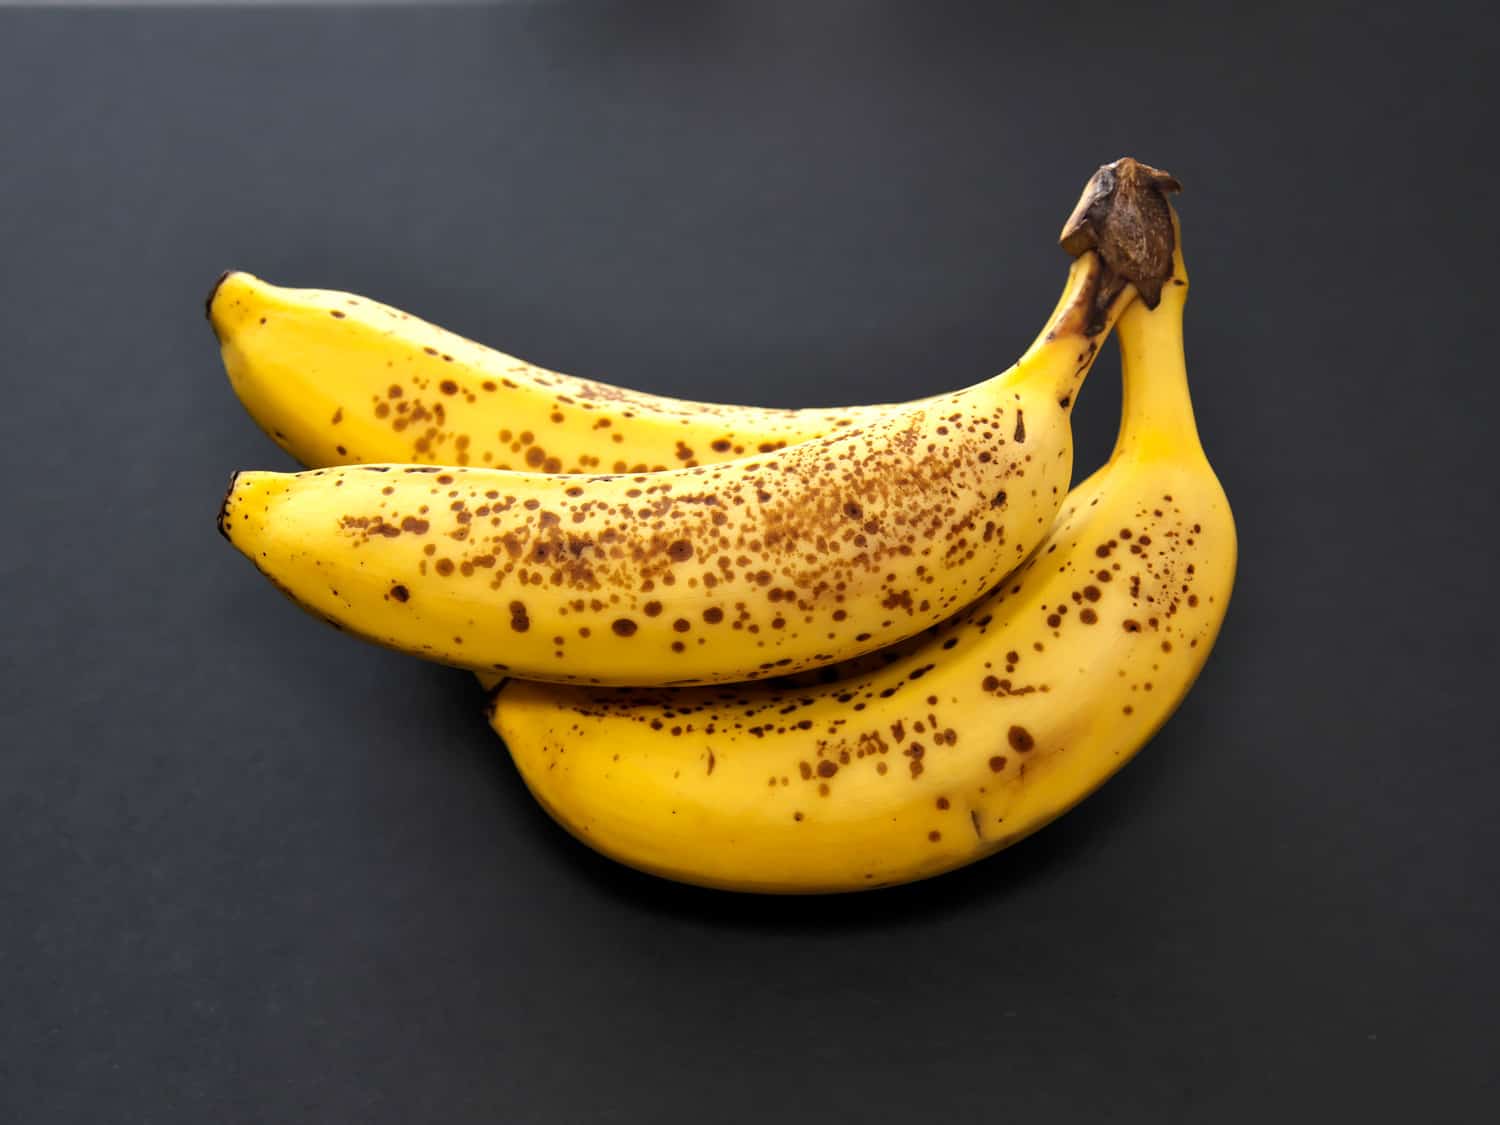  Closeup of ripe bananas on black background